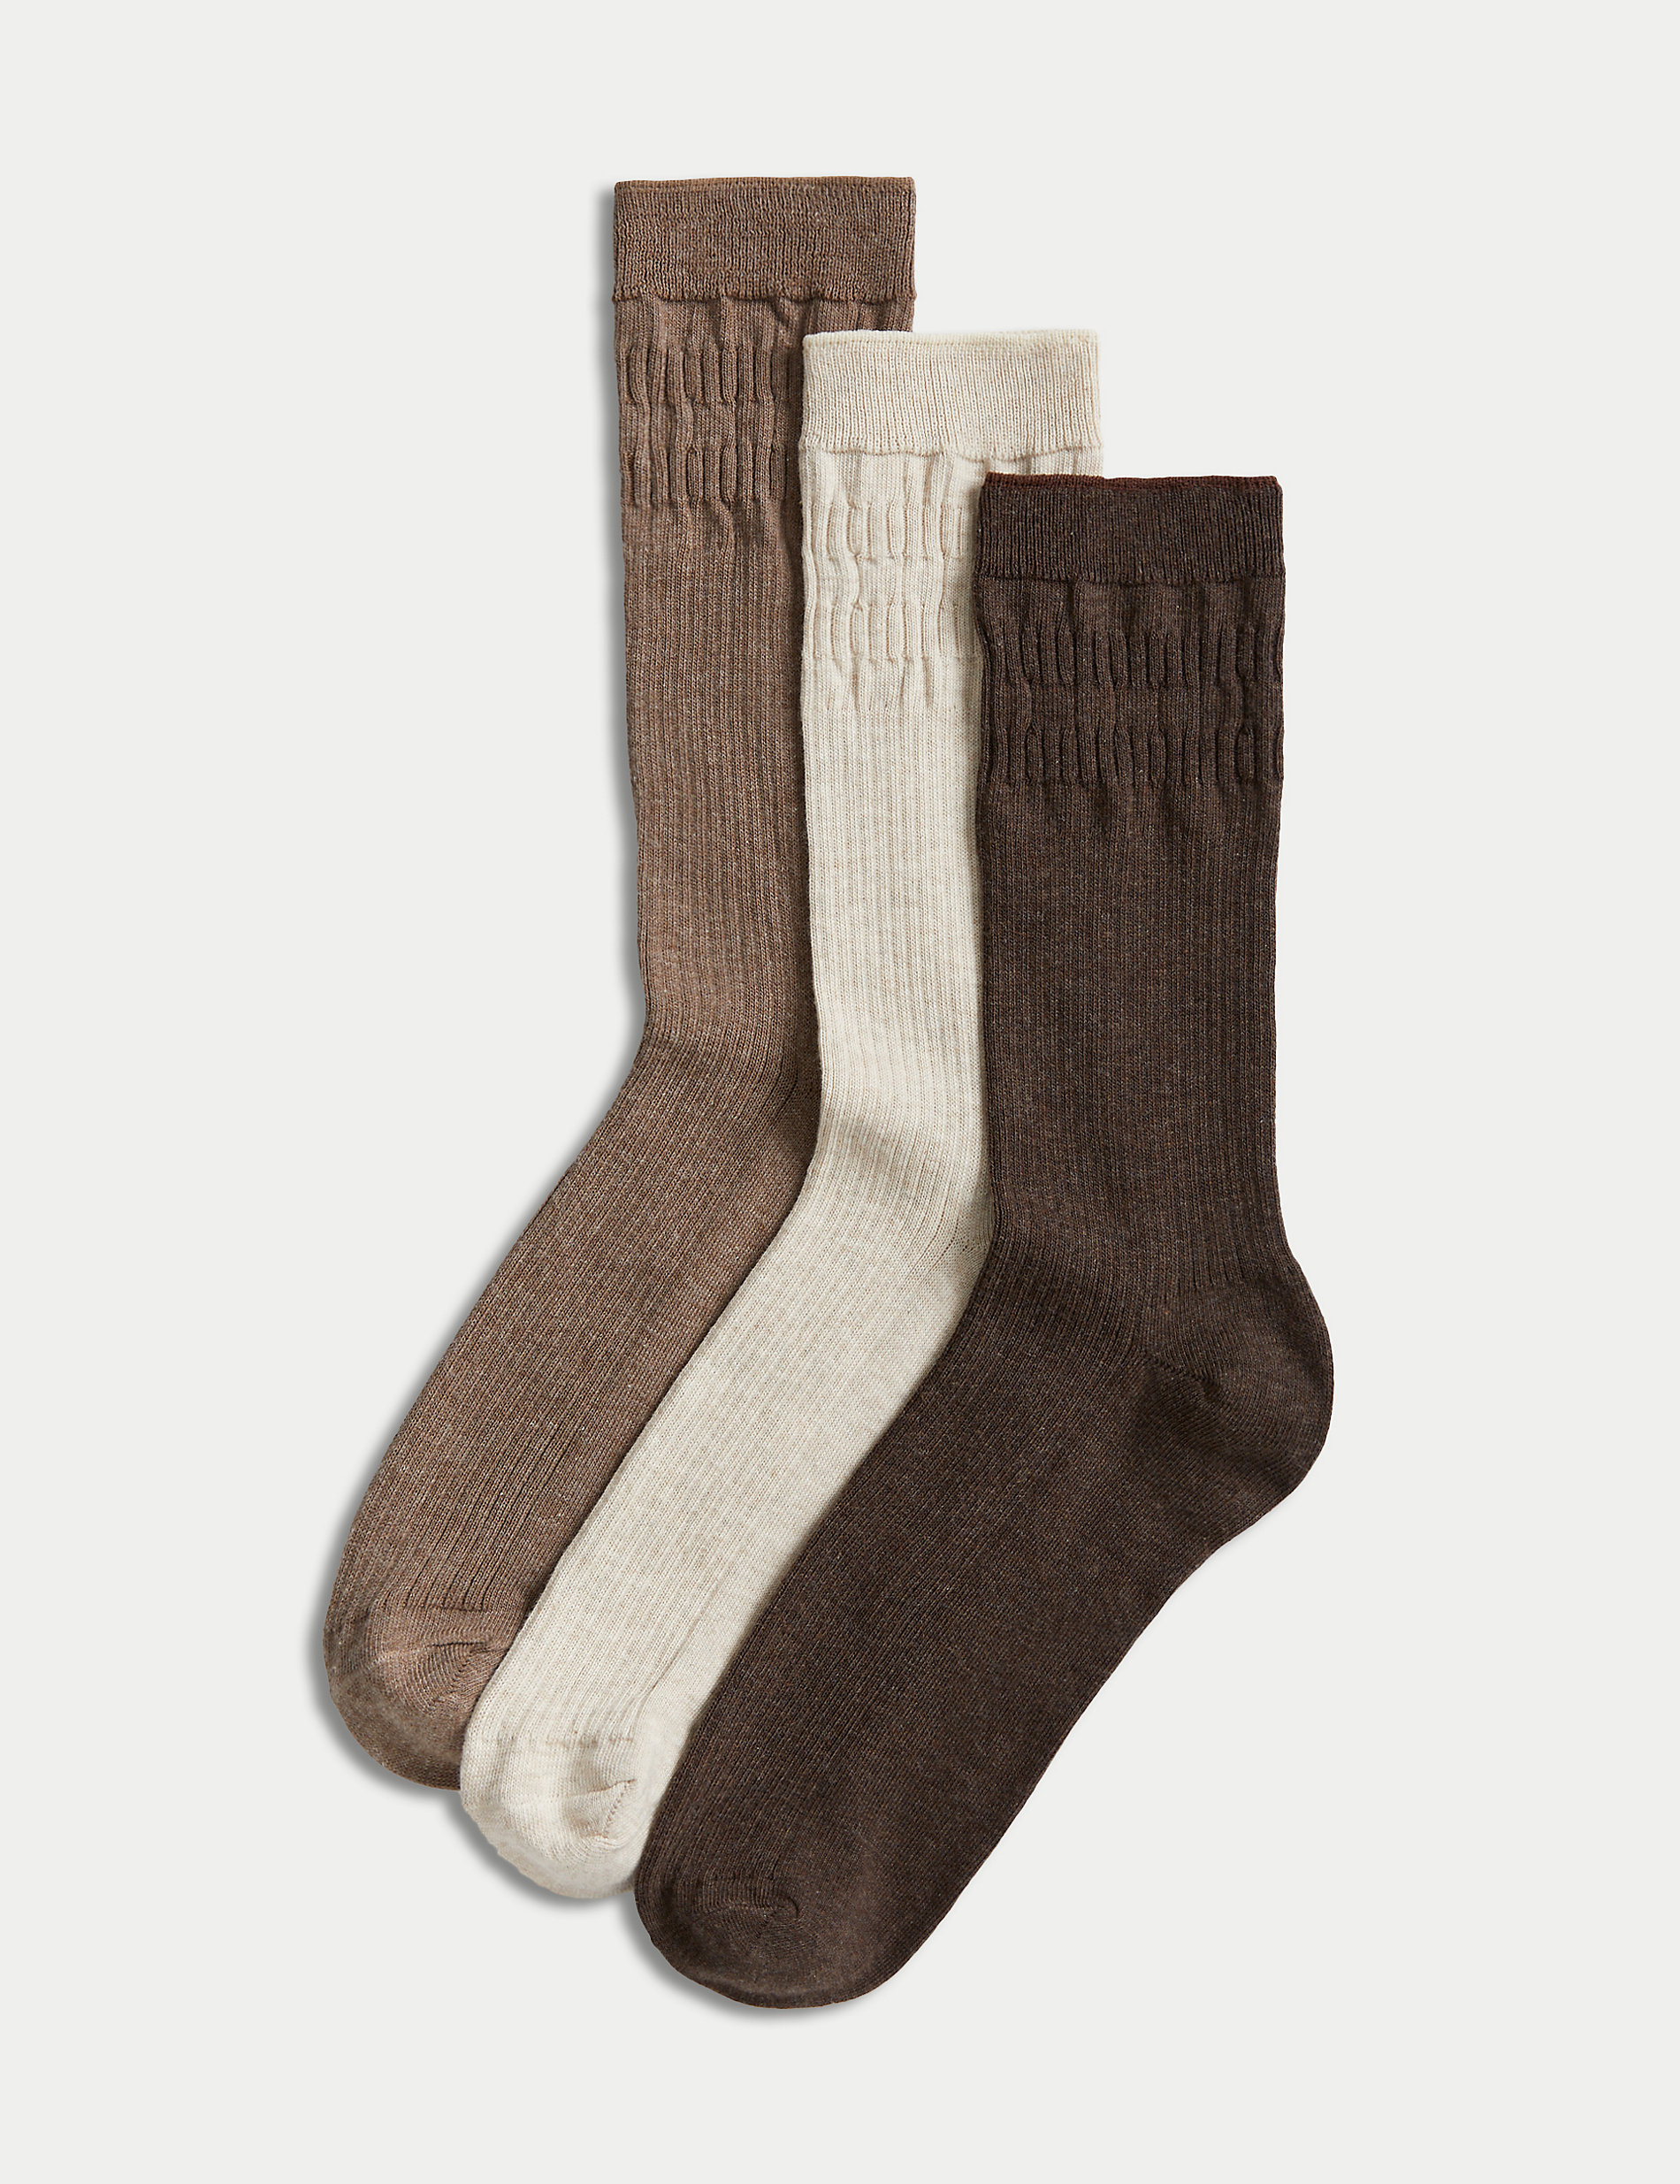 3 пары носков Gentle Grip Cool & Fresh Marks & Spencer, коричневый микс